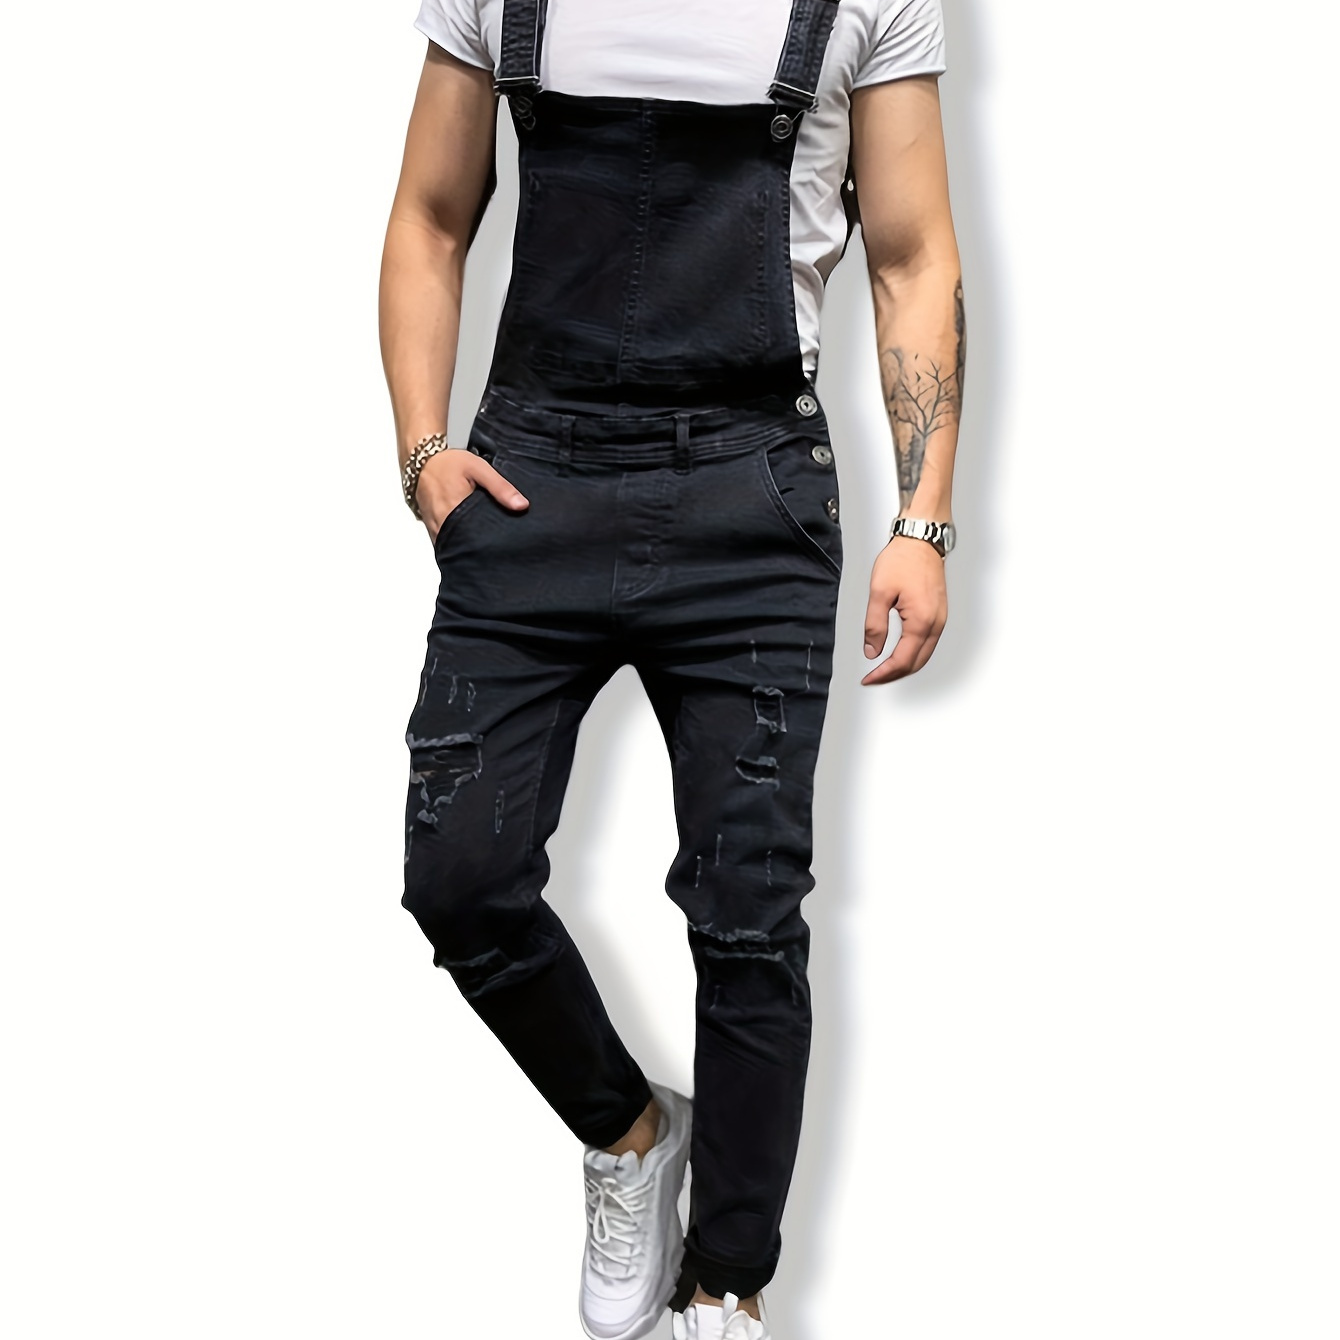 

men's Denim Overalls With Adjustable Shoulder Straps And Multiple Pockets - Durable Workwear For Maximum Storage